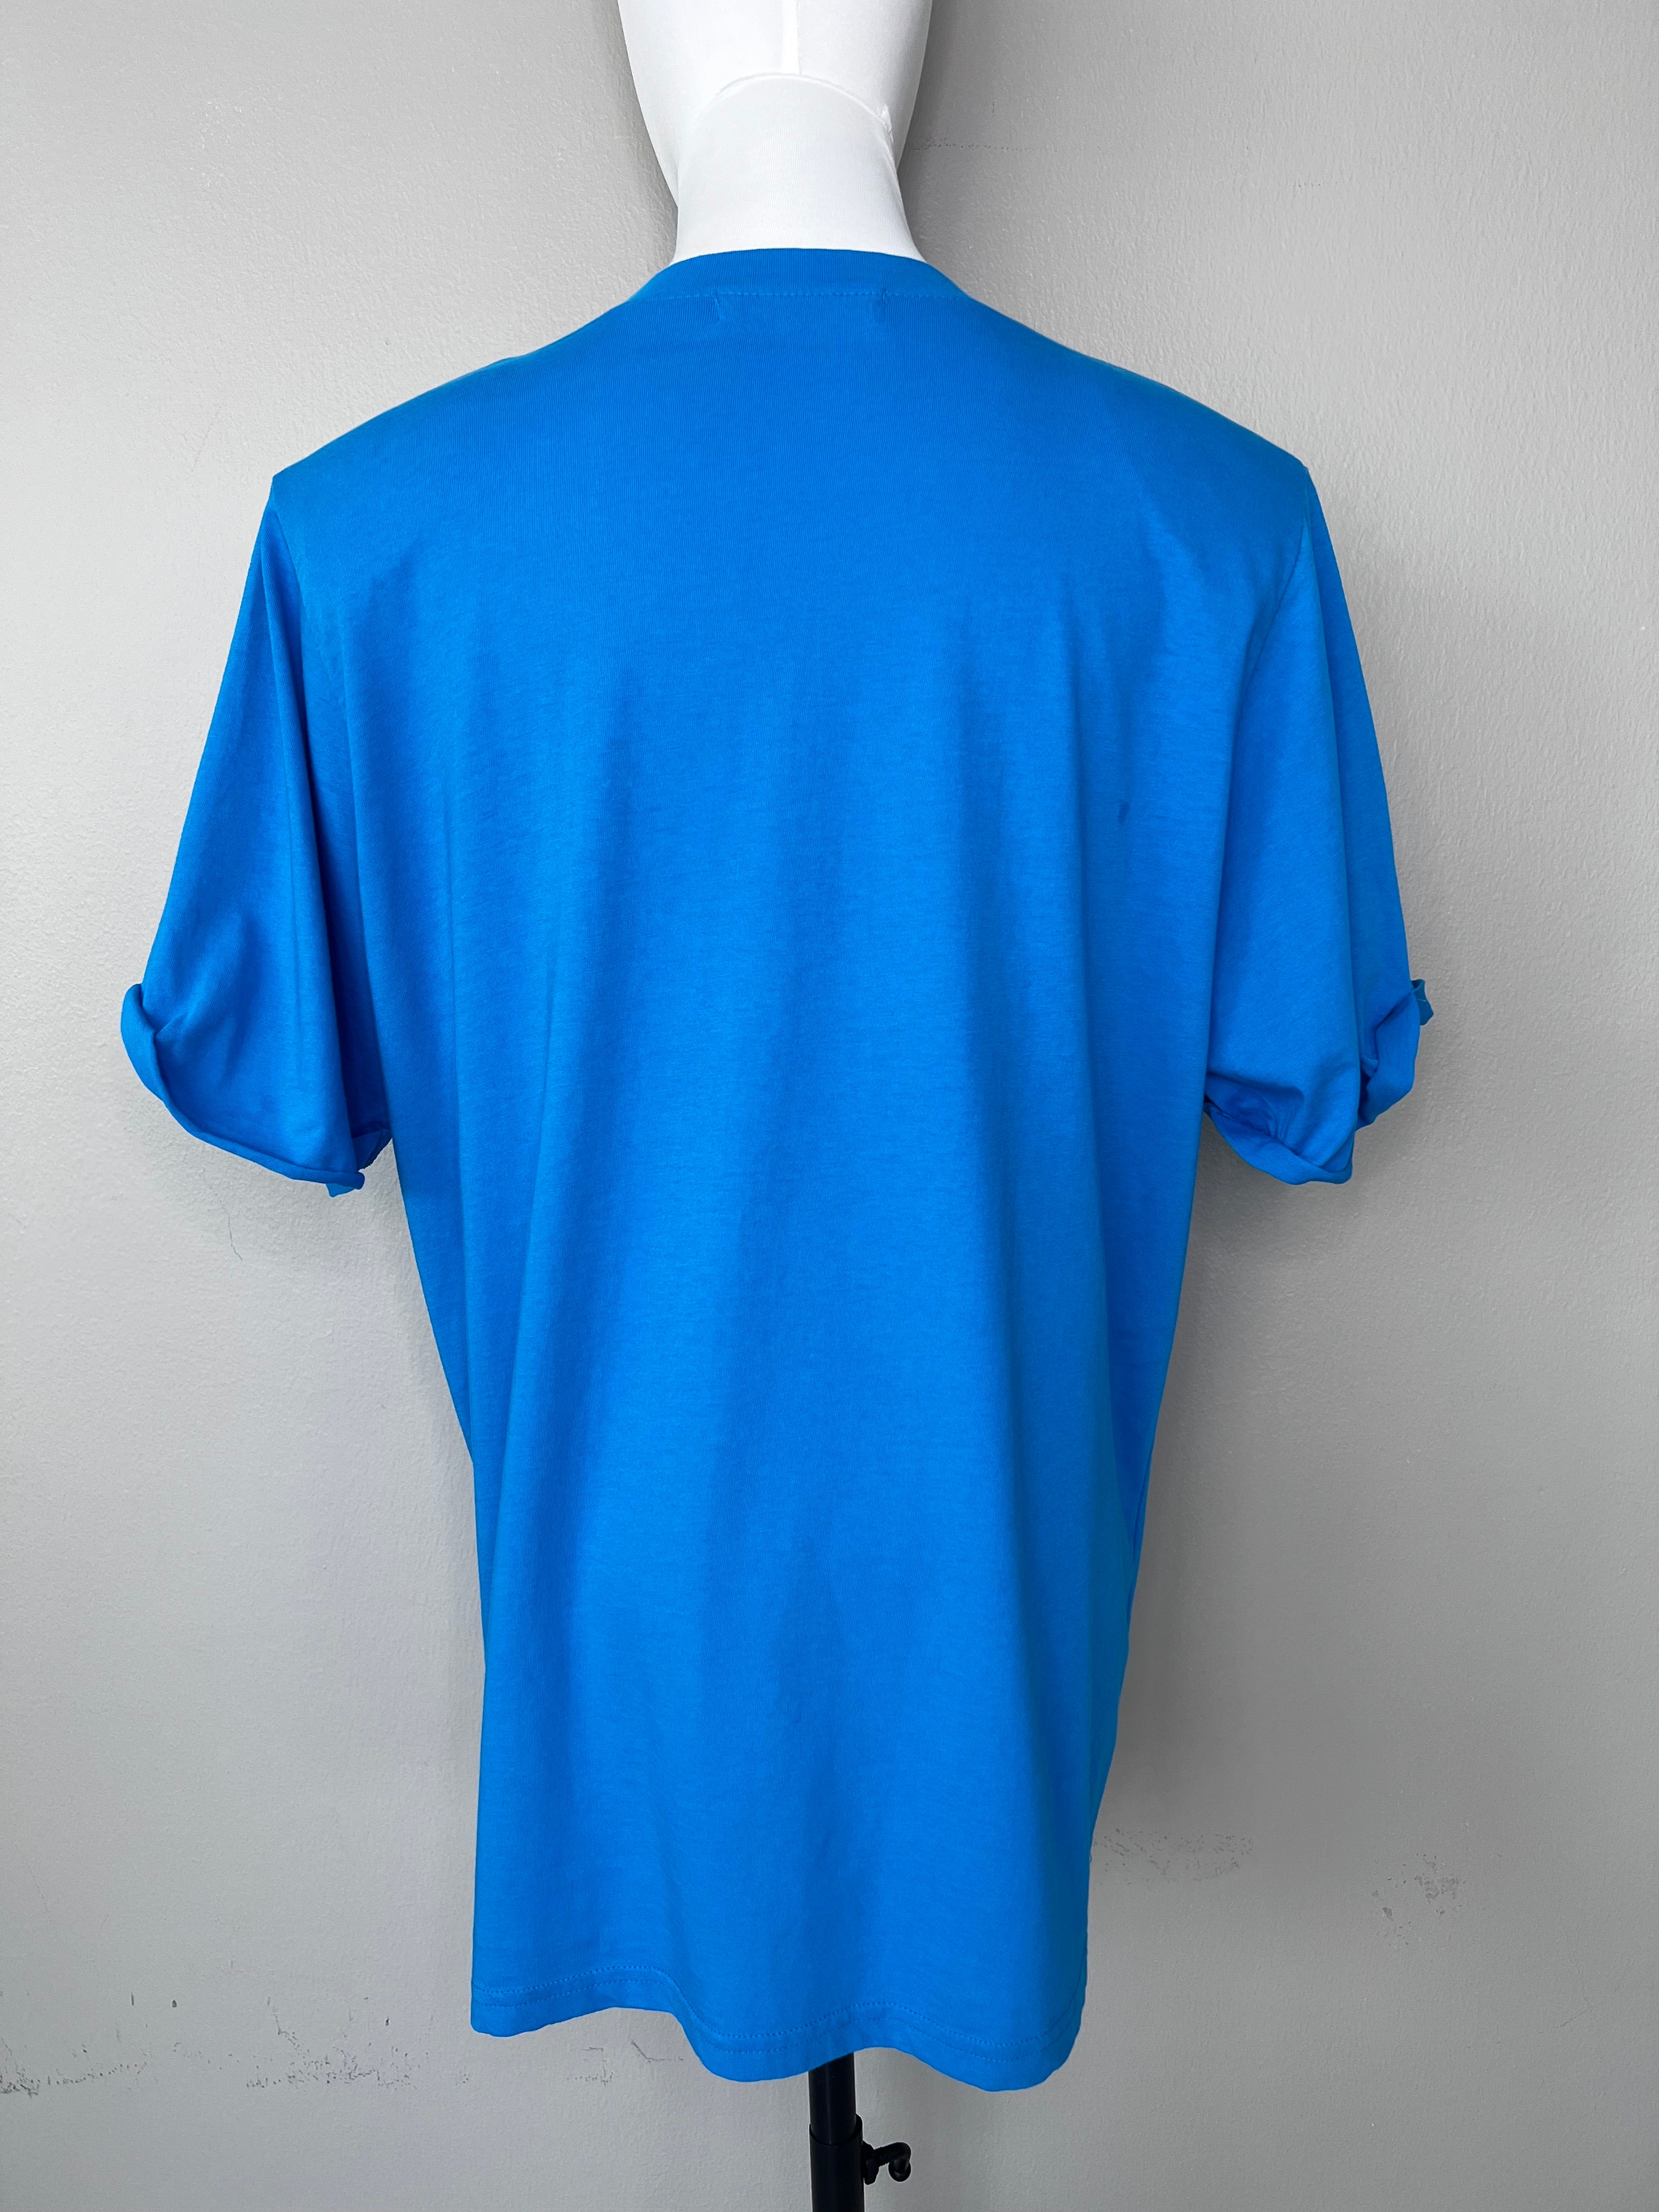 Plain dark blue t-shirt with shoulder pads - THE FRANKIE SHOP